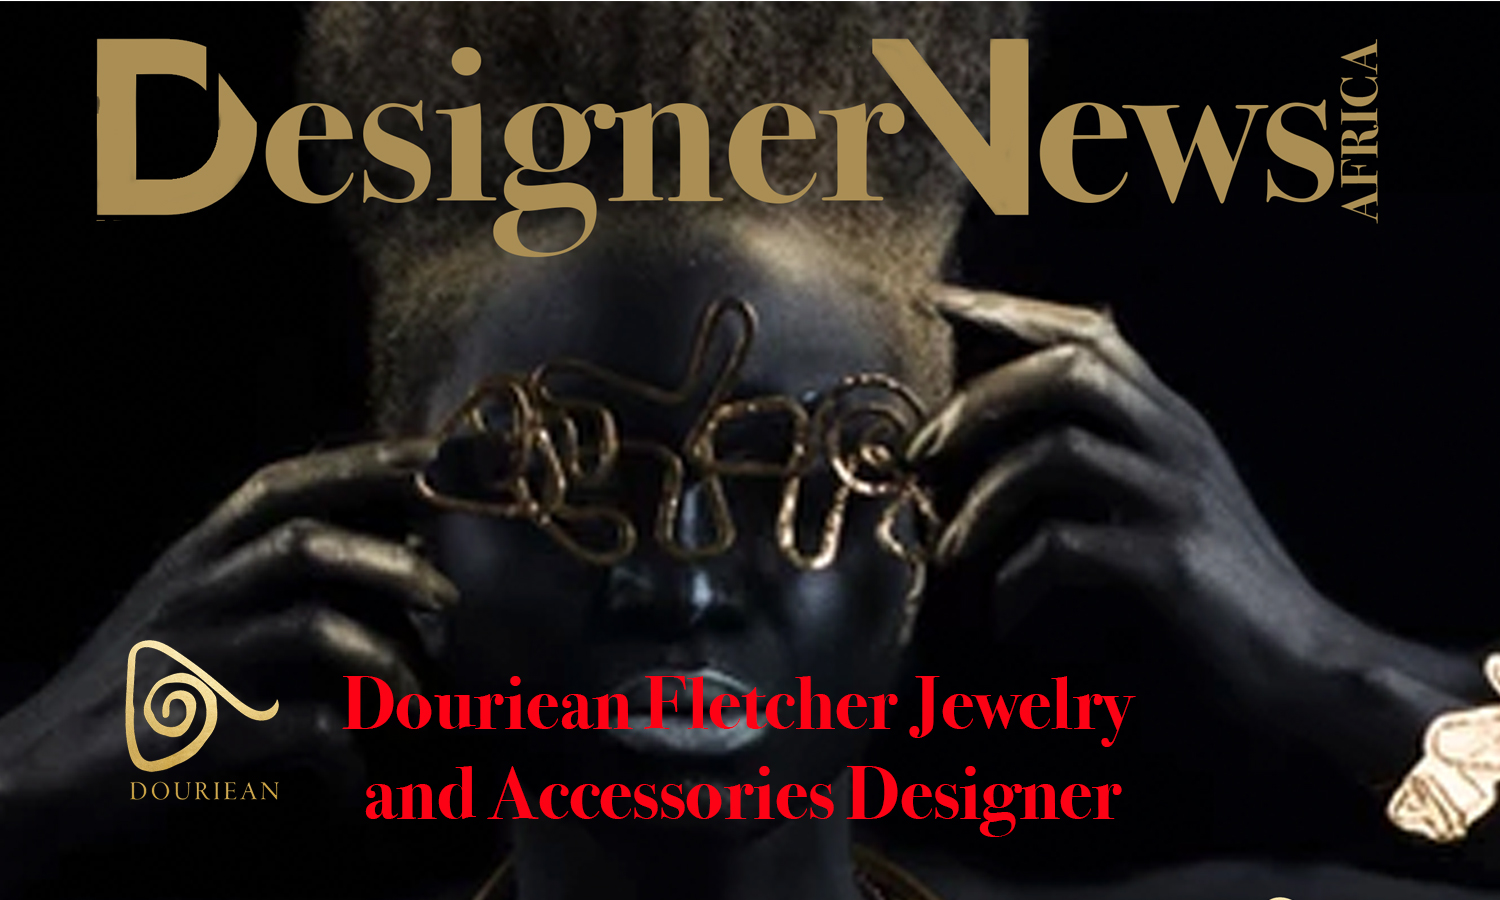 Douriean Fletcher Jewelry and Accessories Designer for Marvel BLACK PANTHE Rjpg-DN-AFRICA-DN-A INTERNATIONAL-INVOGUE-BEST AFRICAN FASHION MAGAZINE